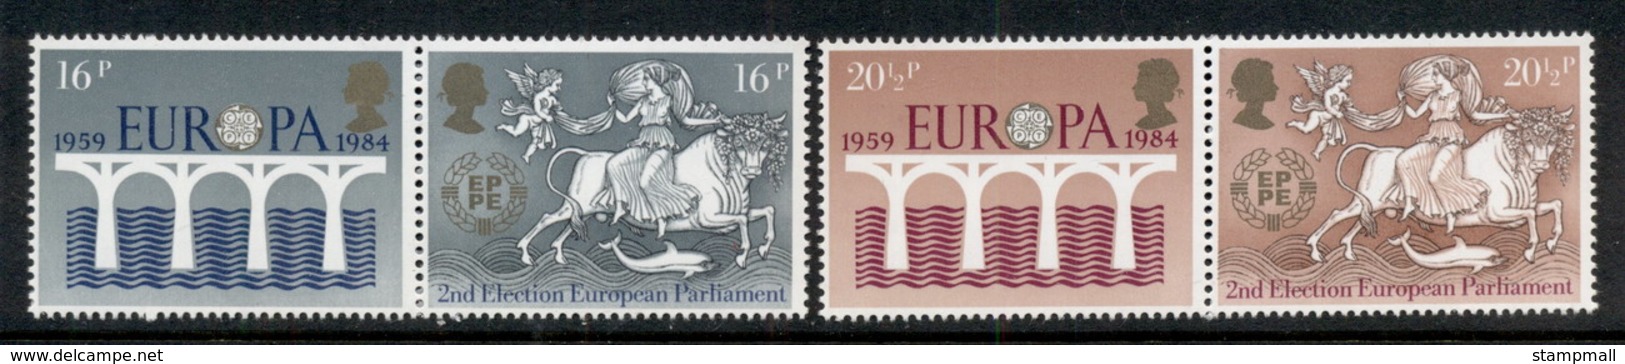 GB 1984 Europa, European Parliament MUH - Unclassified